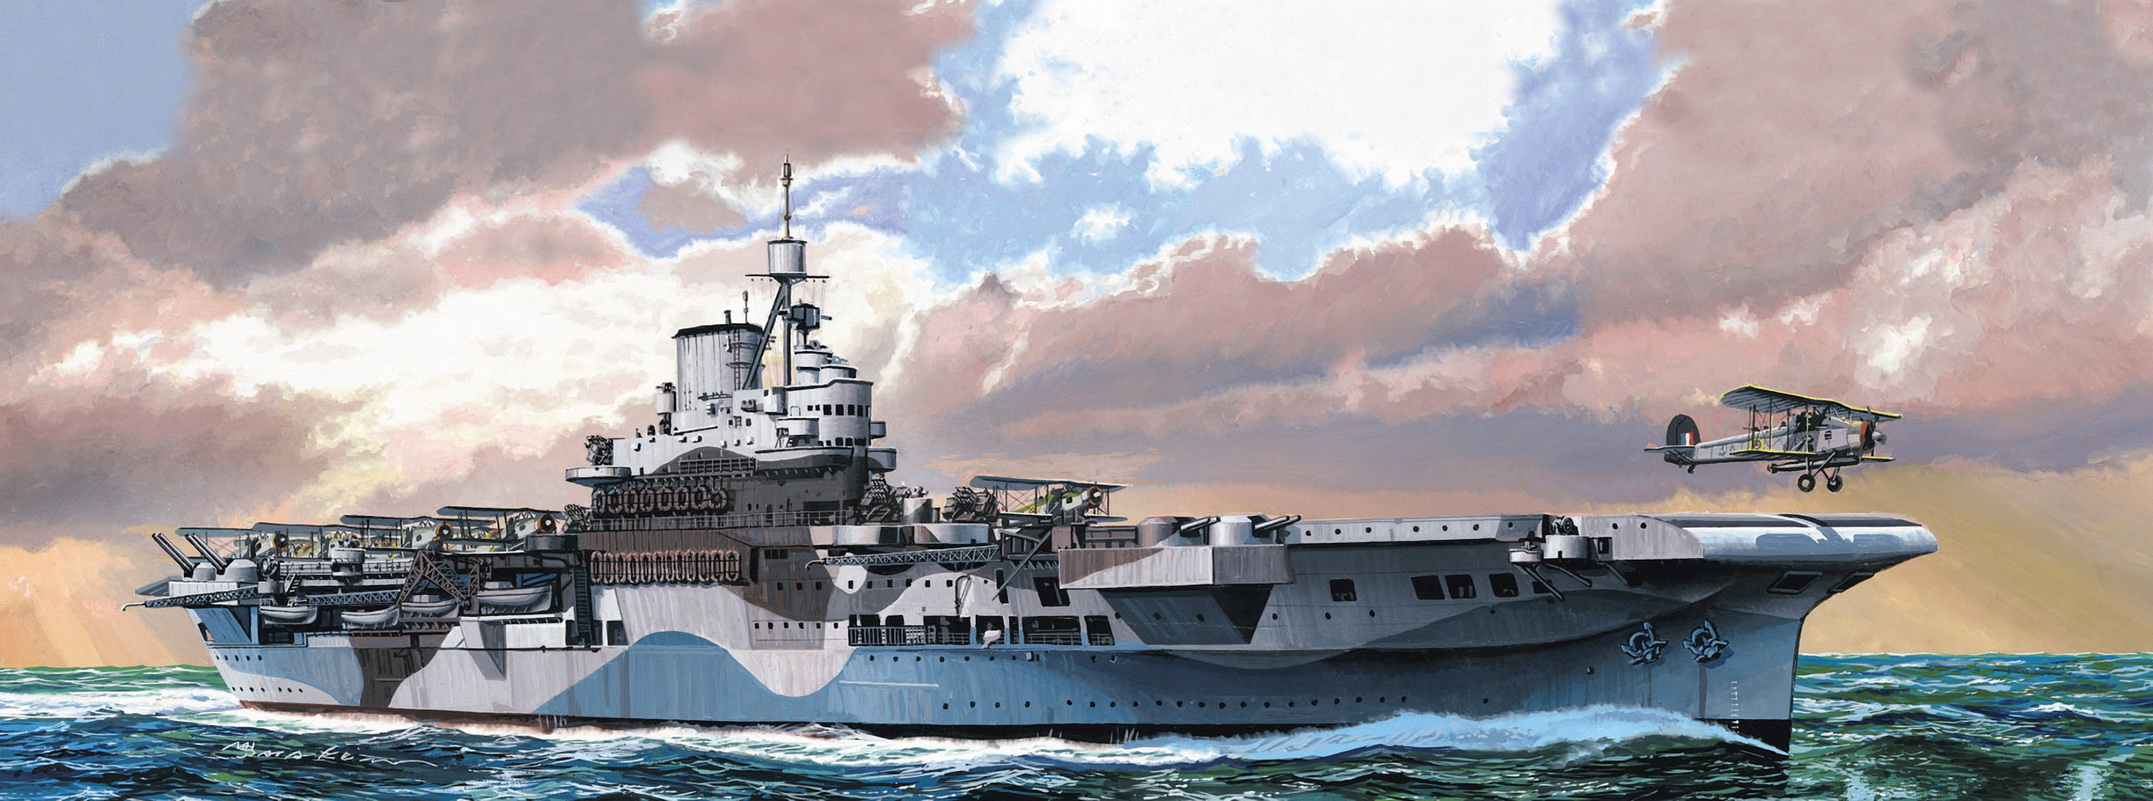 рисунок HMS Illustrious British Aircraft Carrier